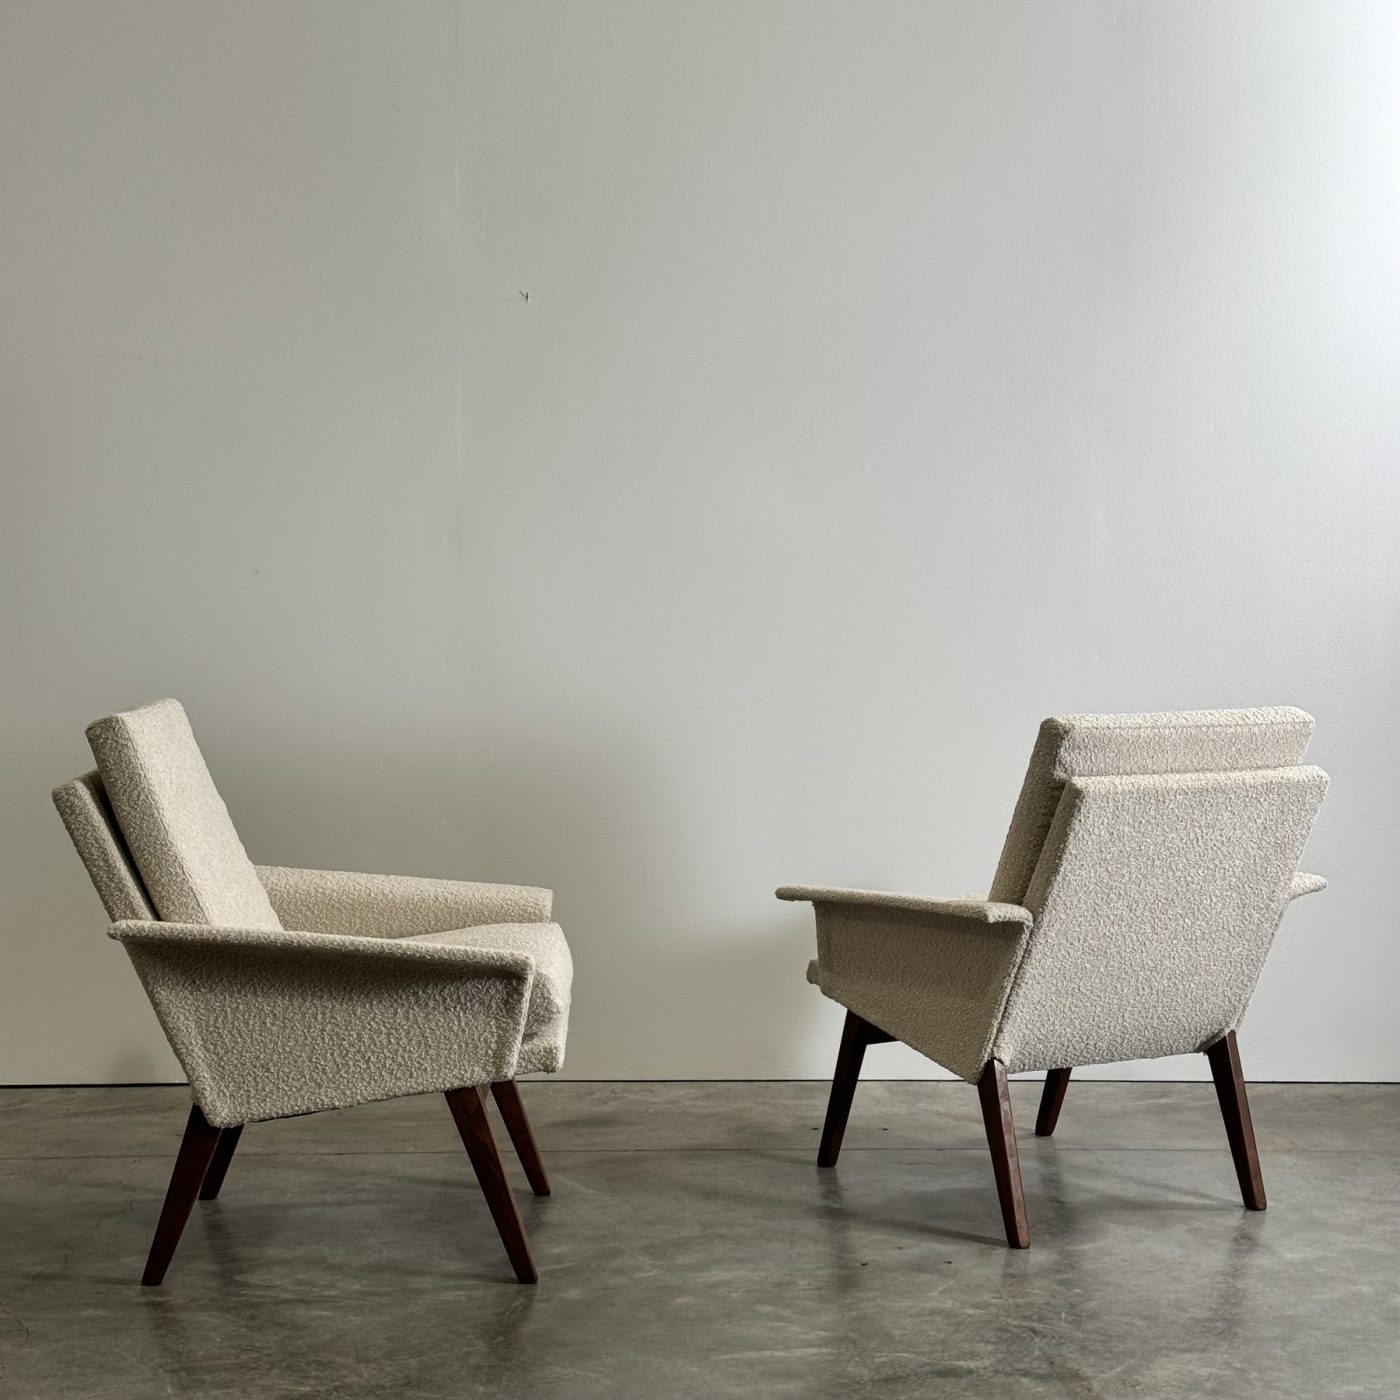 objet-vagabond-vintage-armchairs20002